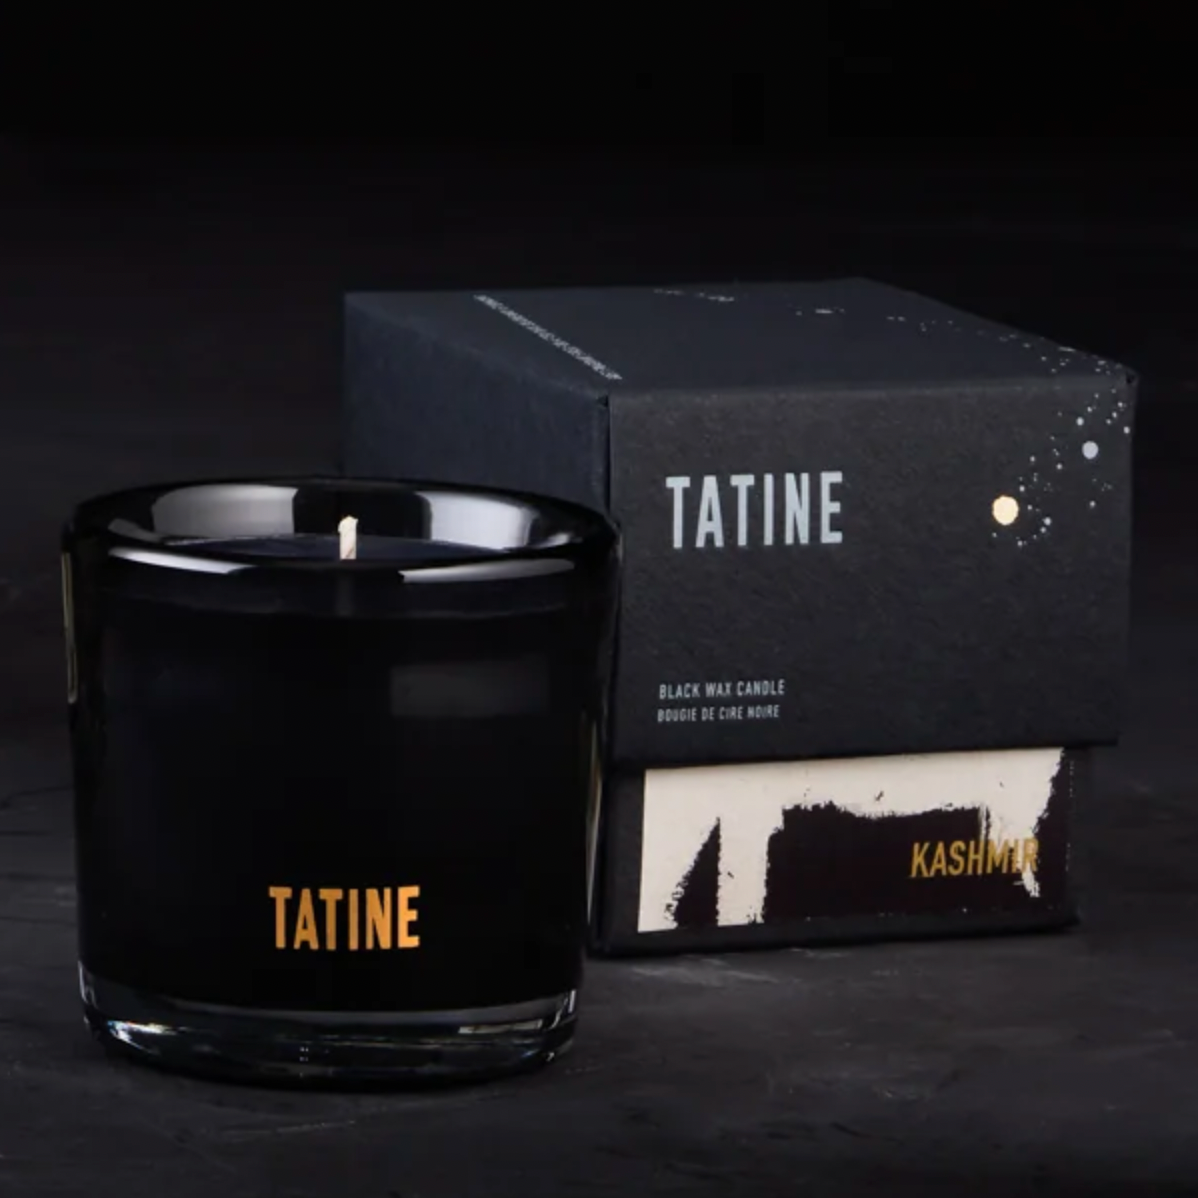 Tatine 3 oz. Candles